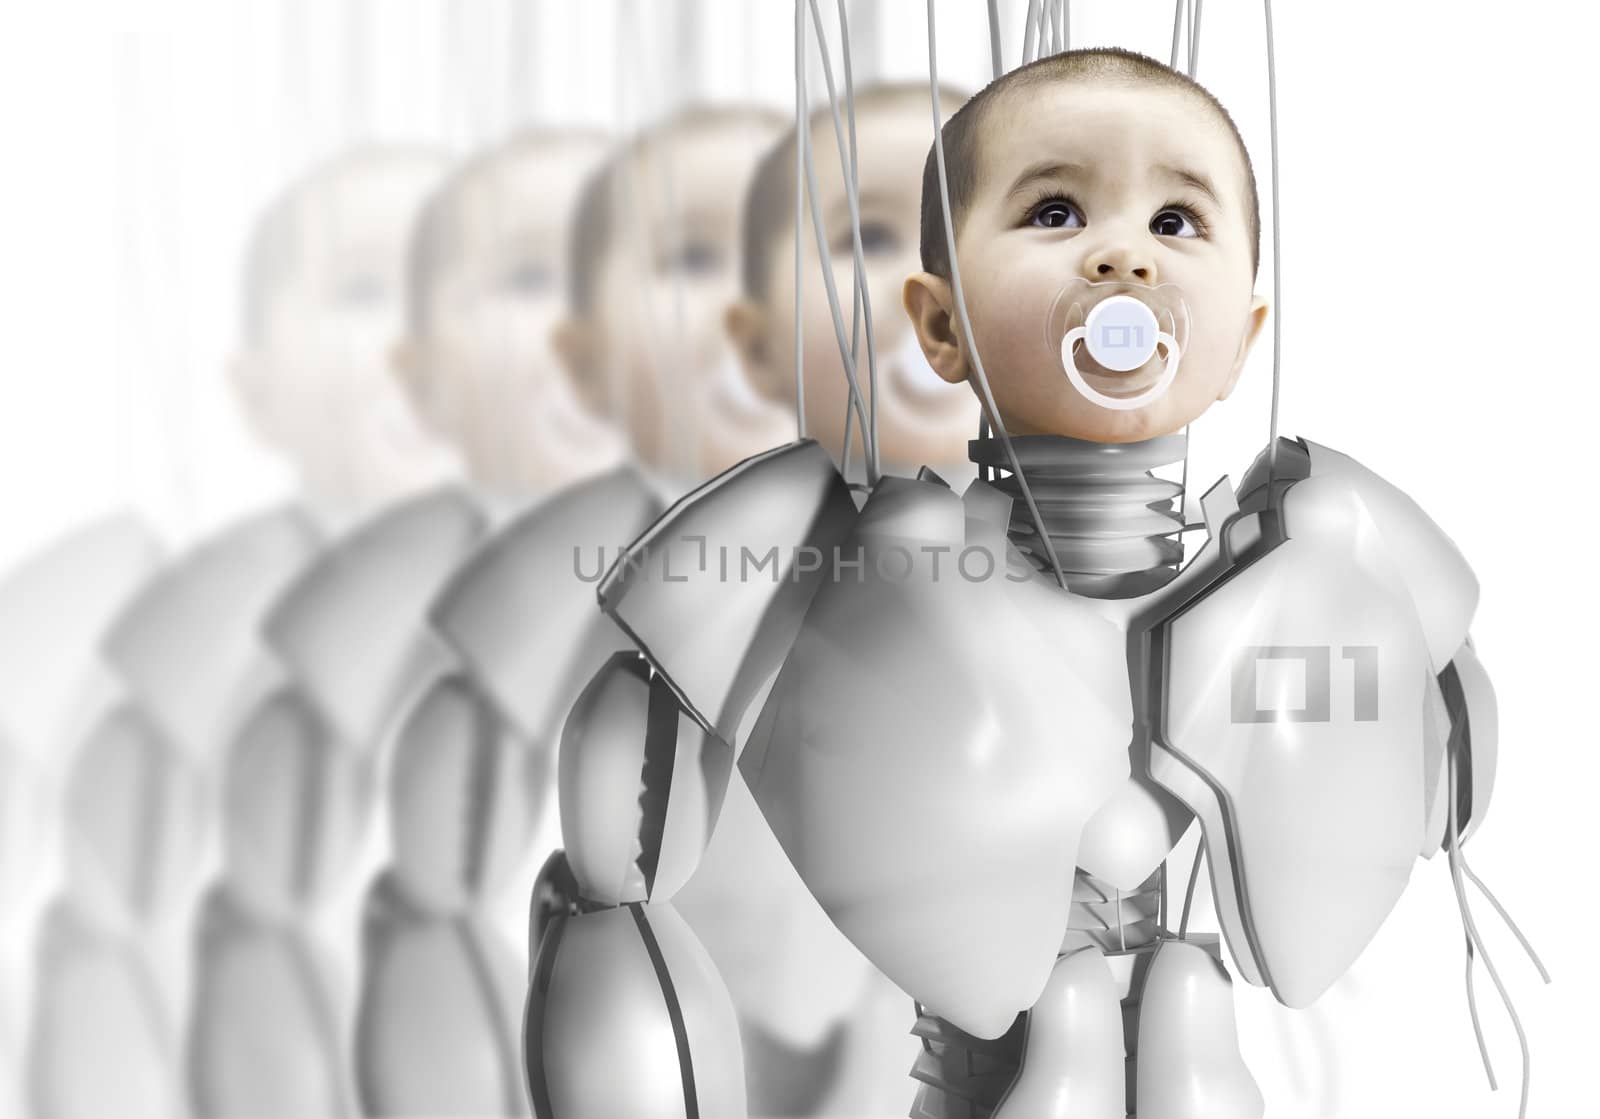 Child robot, creating clones, genetic engineering by FernandoCortes